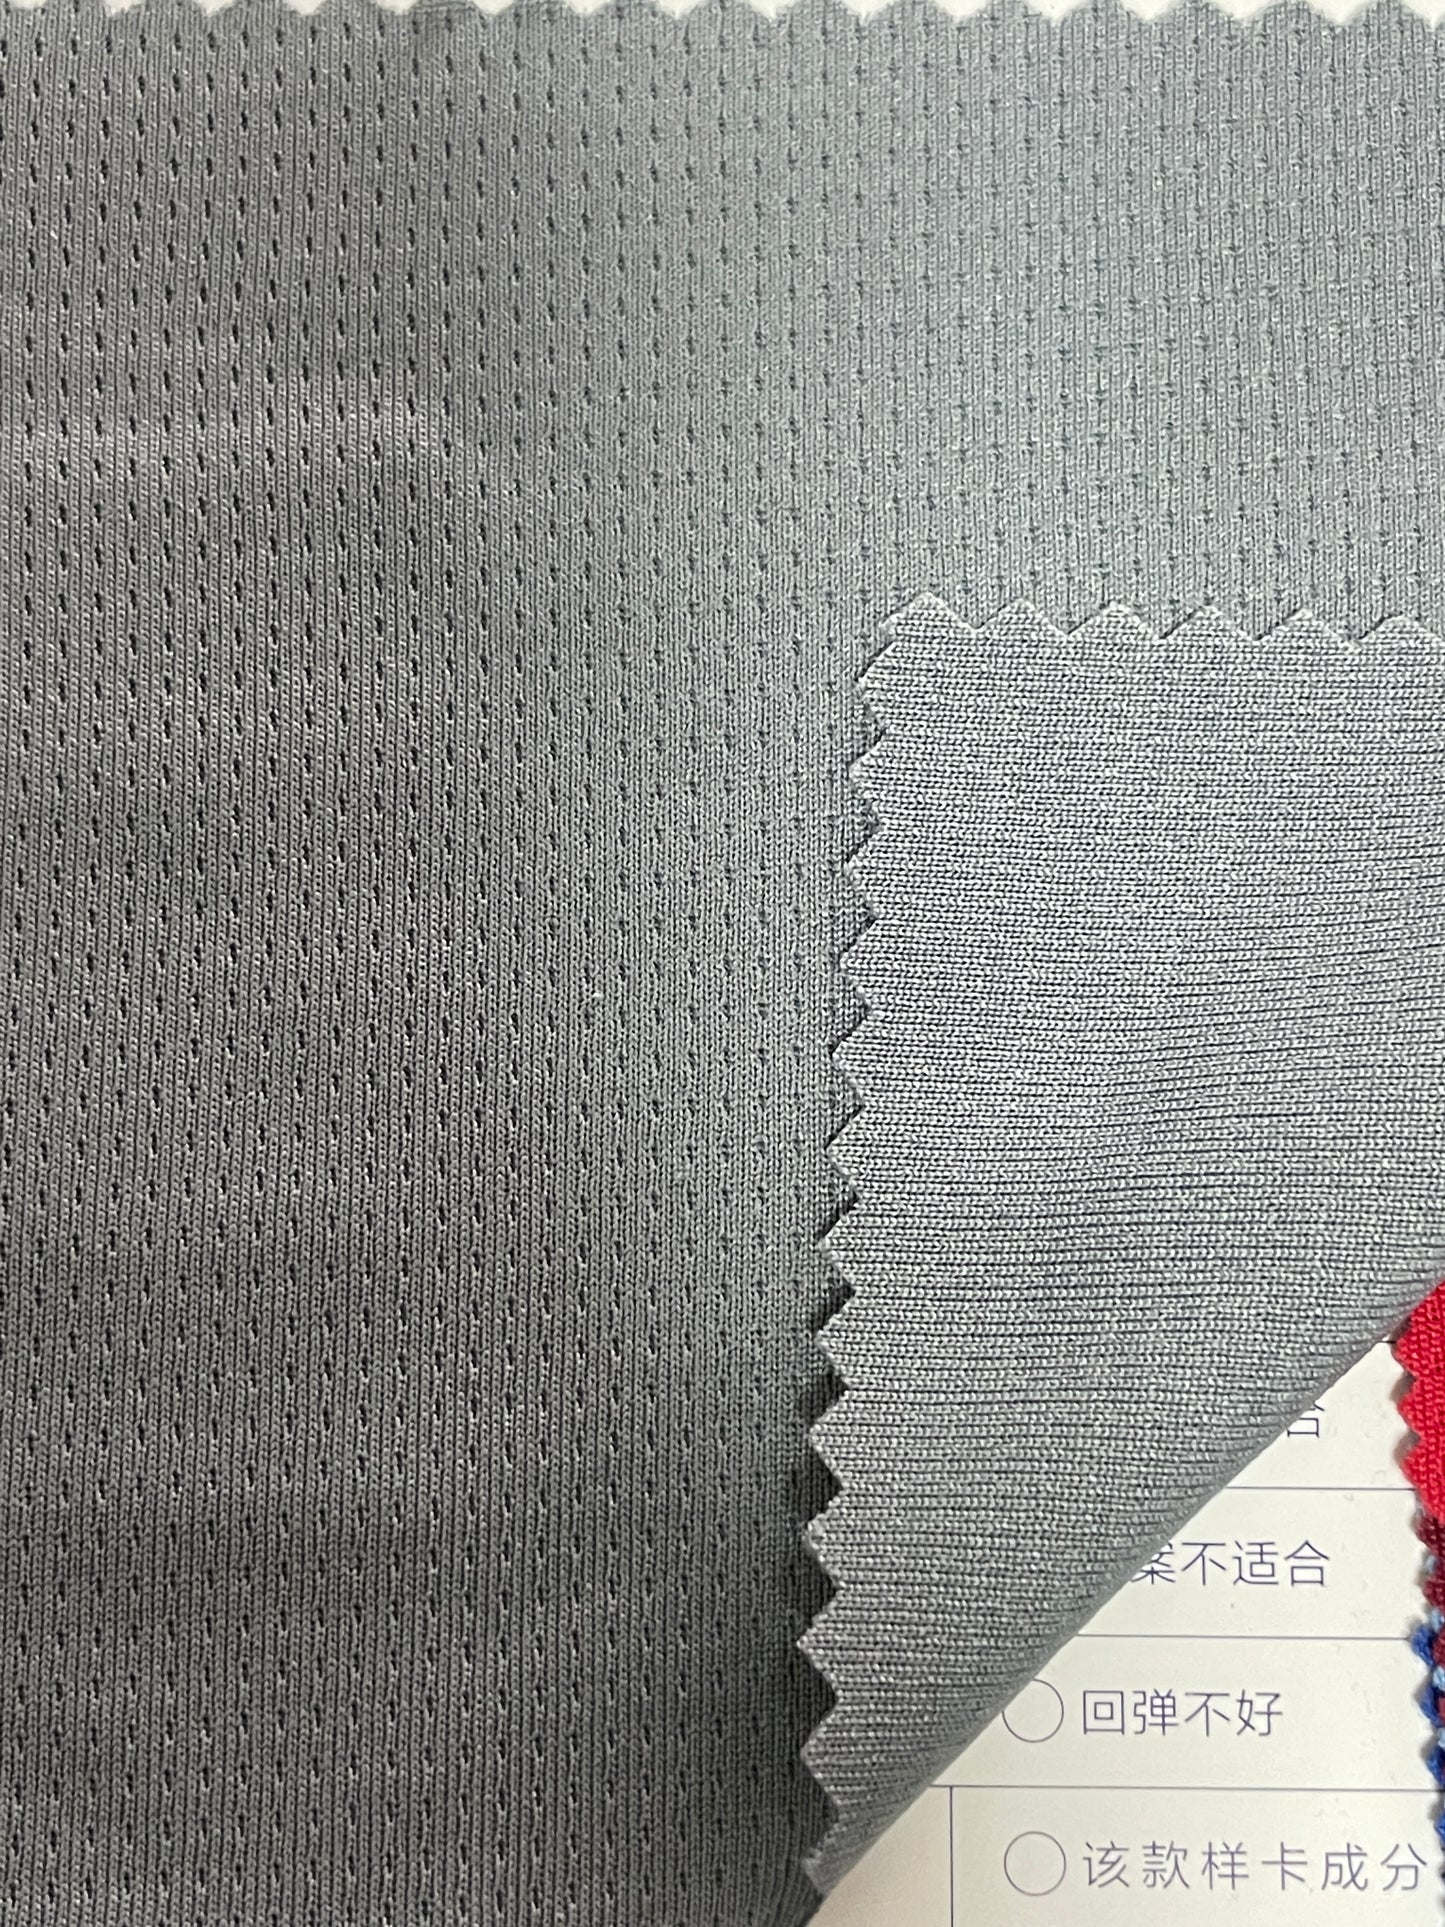 Functional Quick Dry Football & Basketball Fabric --100% Polyester - Natasha Fabric